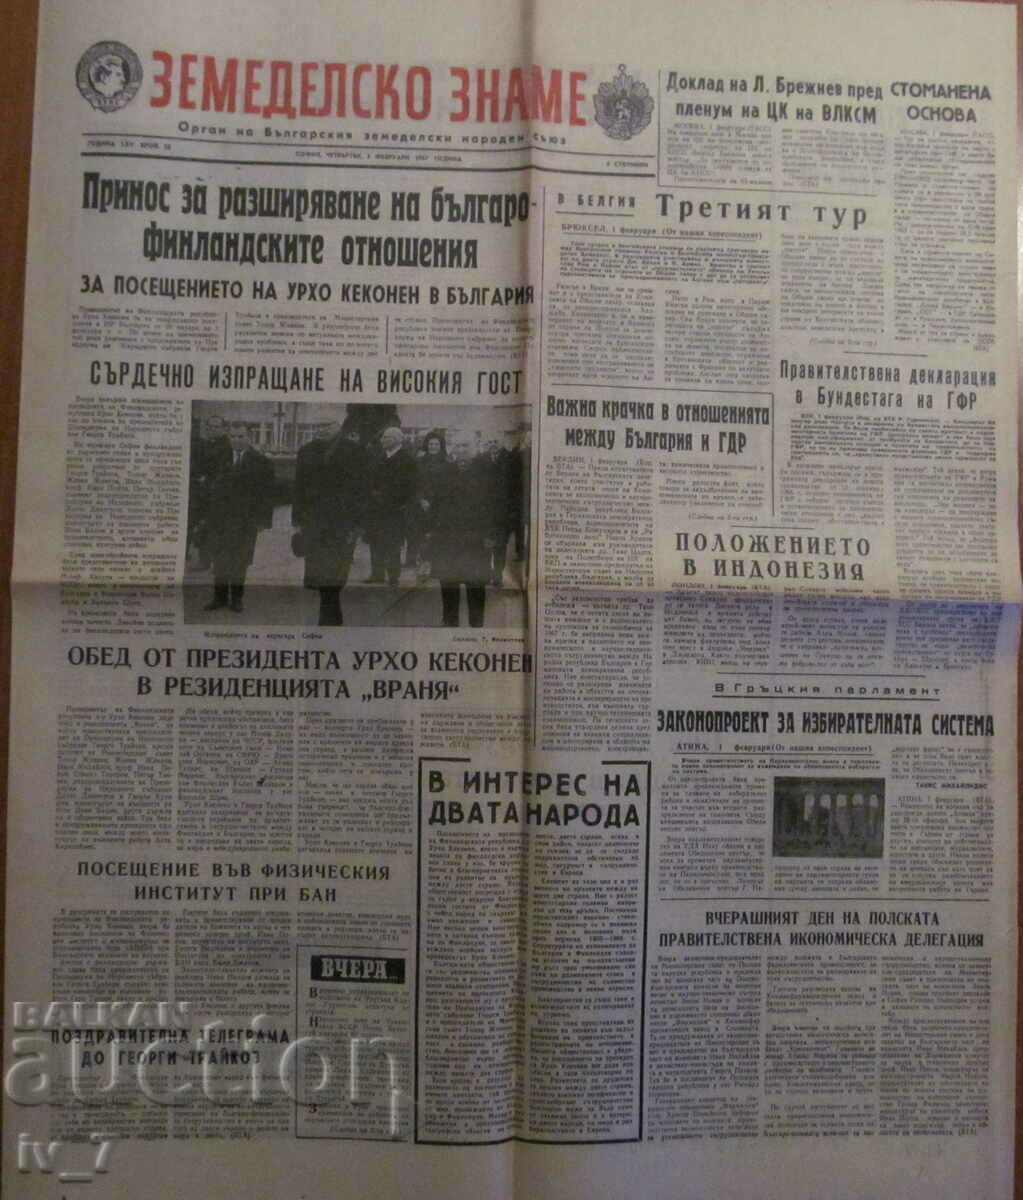 Вестник "ЗЕМЕДЕЛСКО ЗНАМЕ" - 2 февруари 1967 година